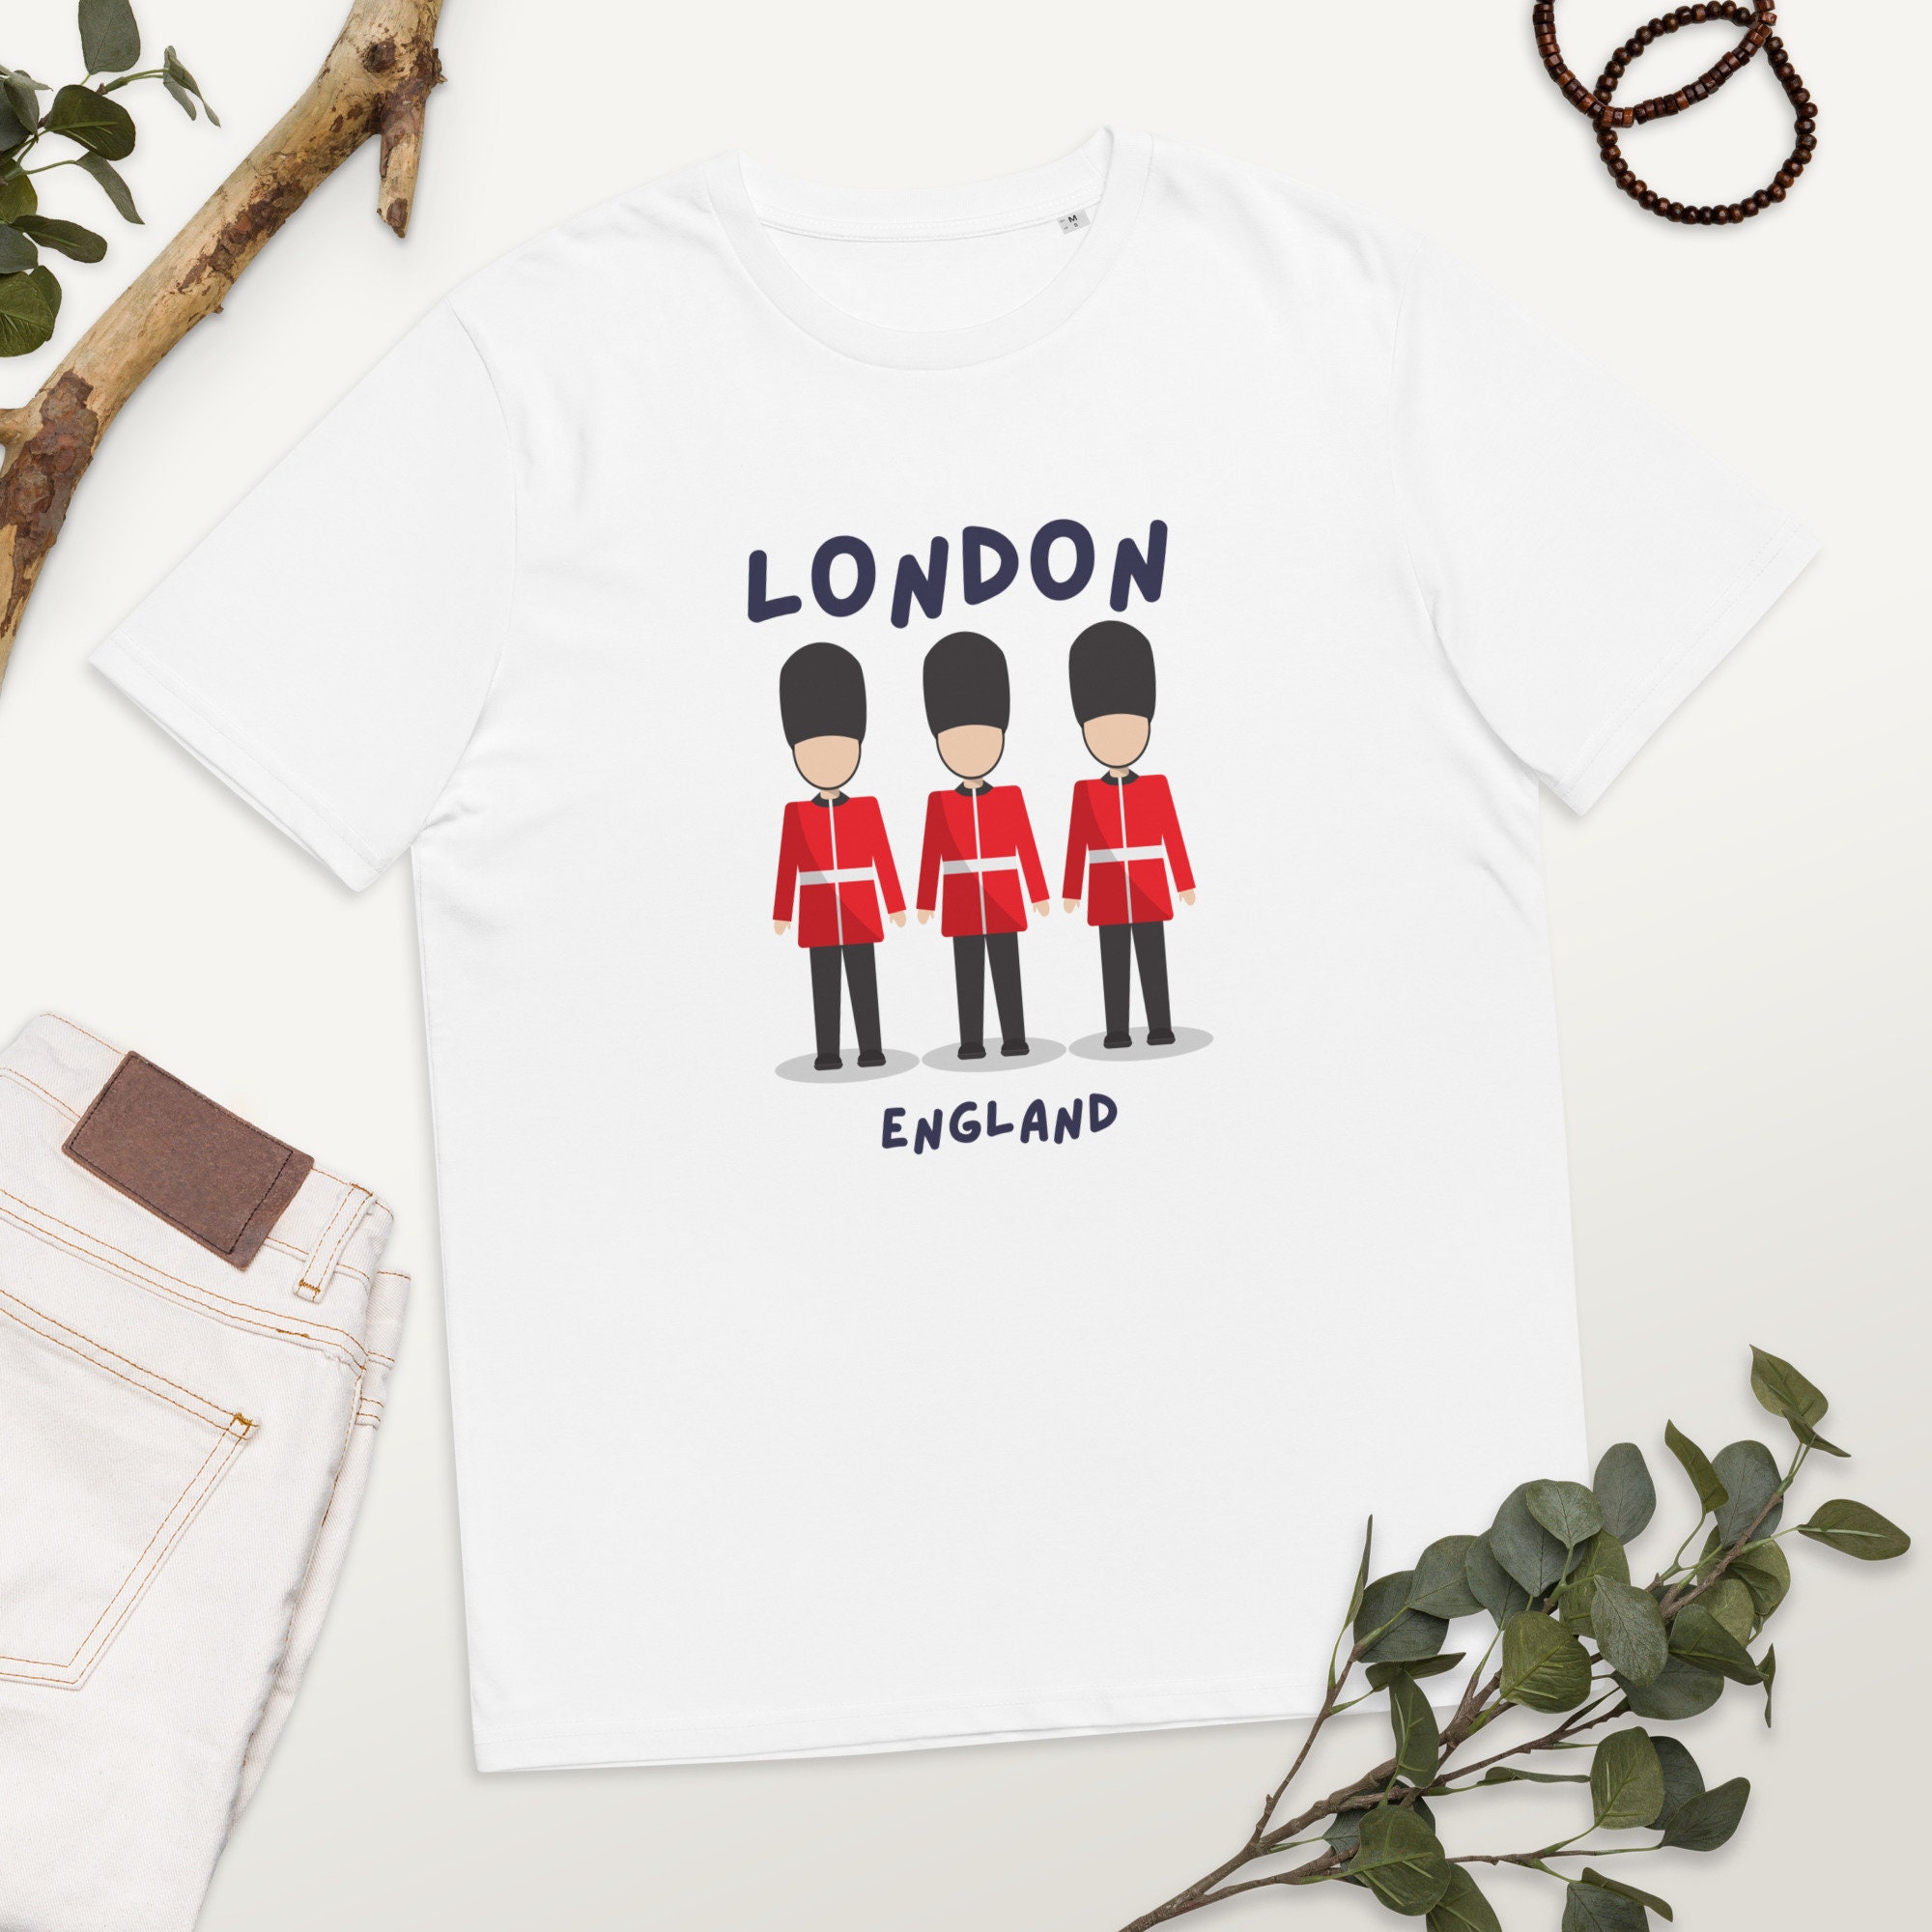 Discover London England - Royal Guard - Unisex organic cotton t-shirt